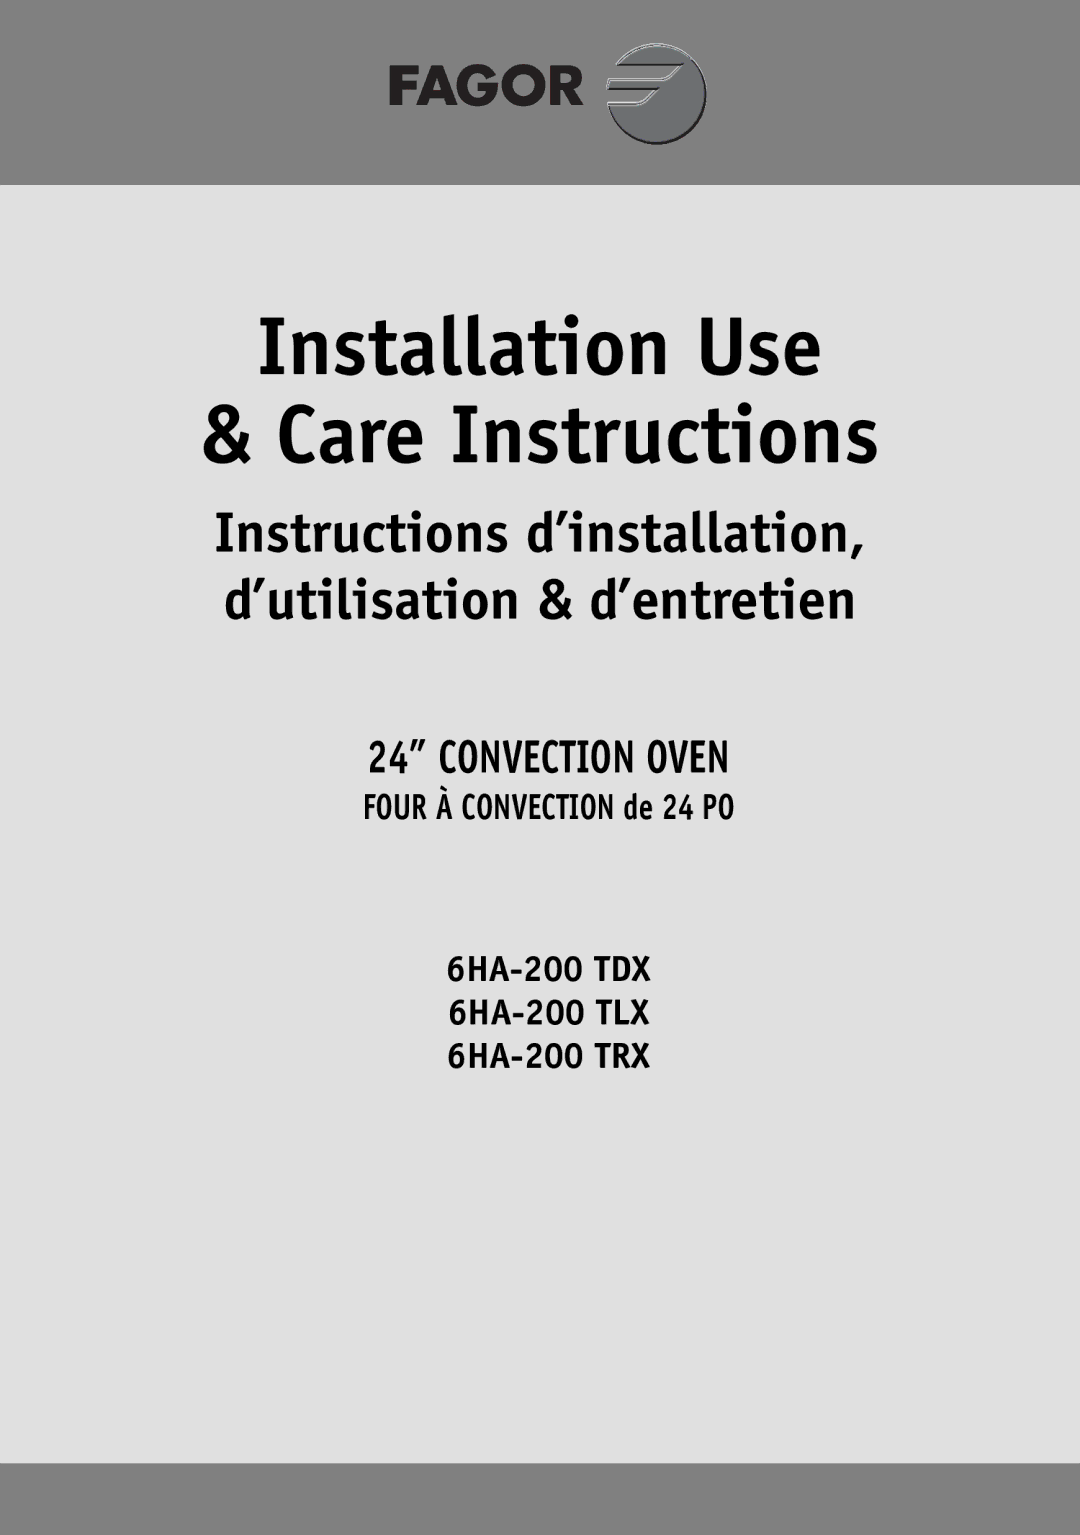 Fagor America 6HA-200 TRX, 6HA-200 TLX, 6HA-200 TDX manual Installation Use Care Instructions 